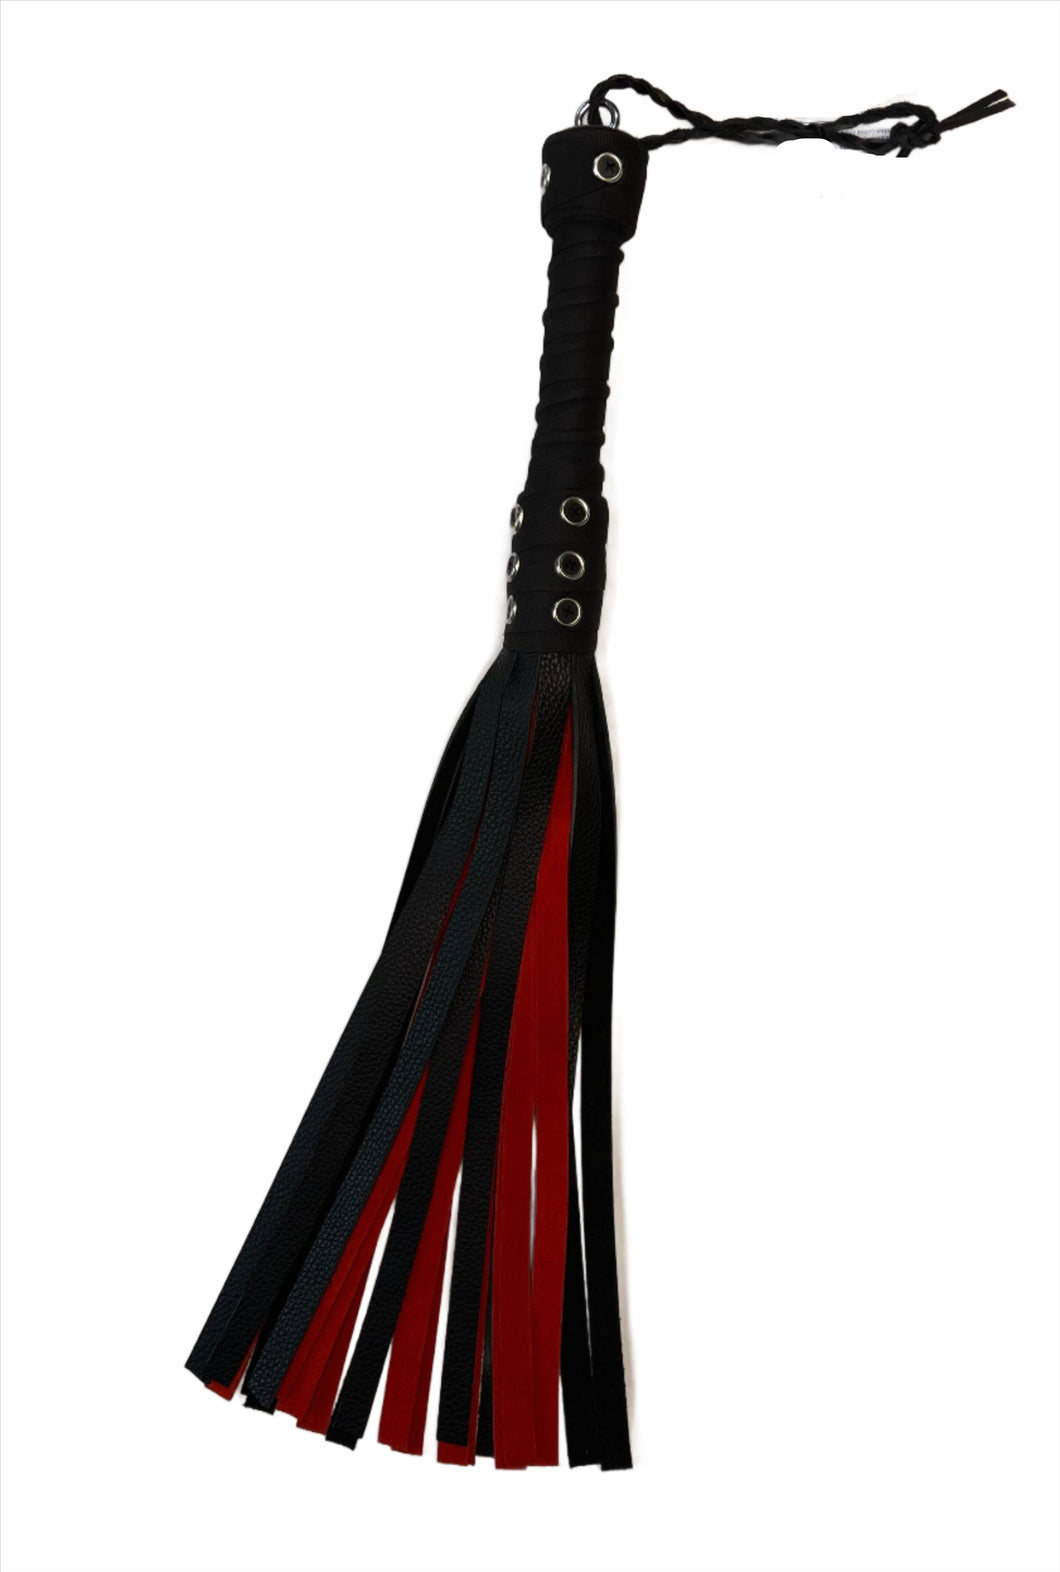 Bare Leatherworks - Midsize Cow Flogger (Black/Red)